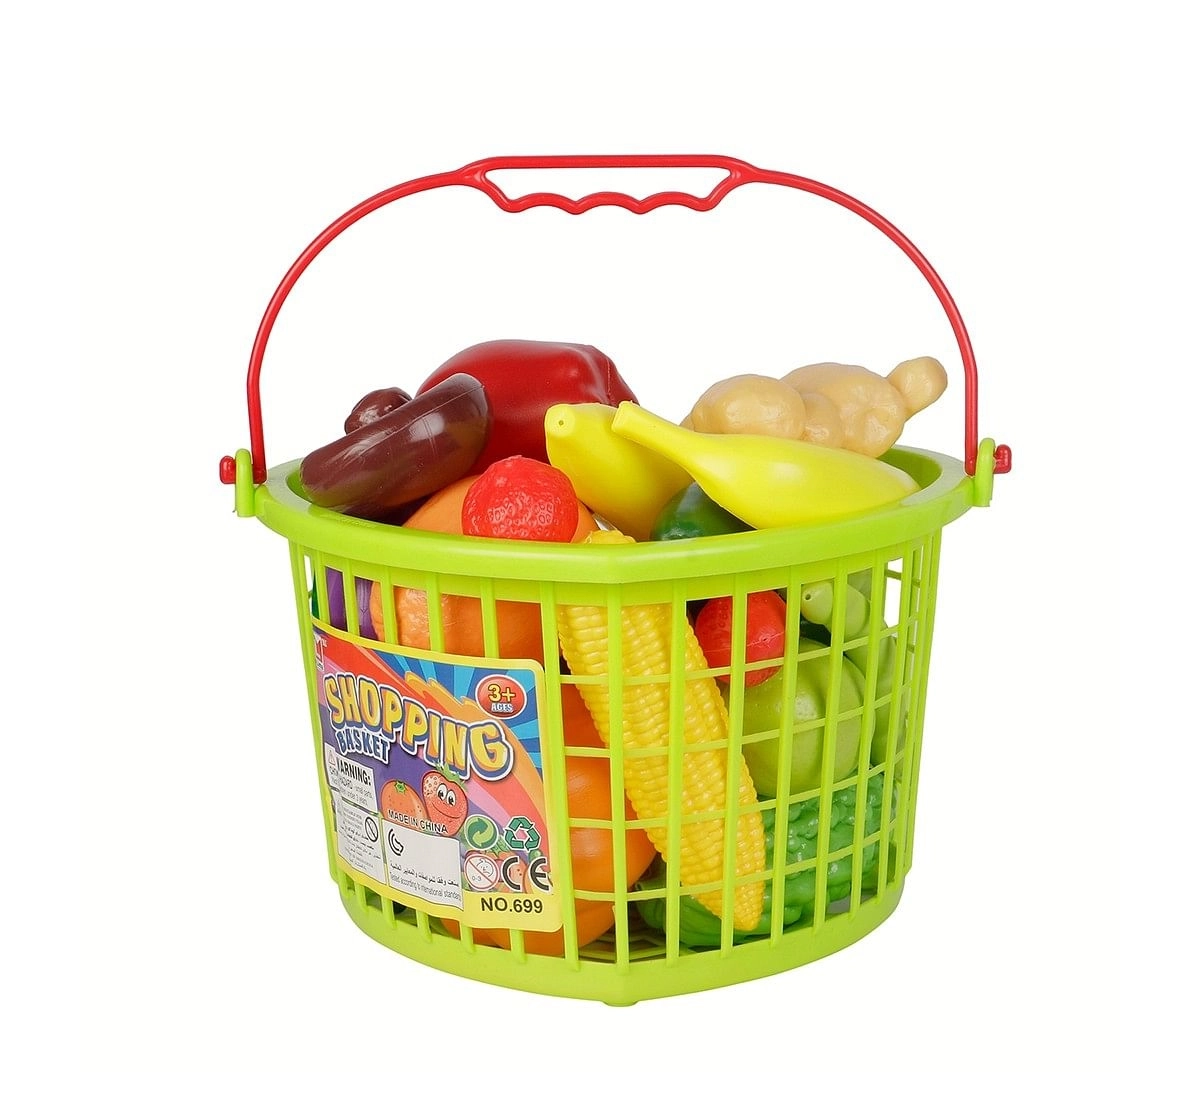 Comdaq Heart Shaped Vegetable Basket Playset for age 3Y+ 